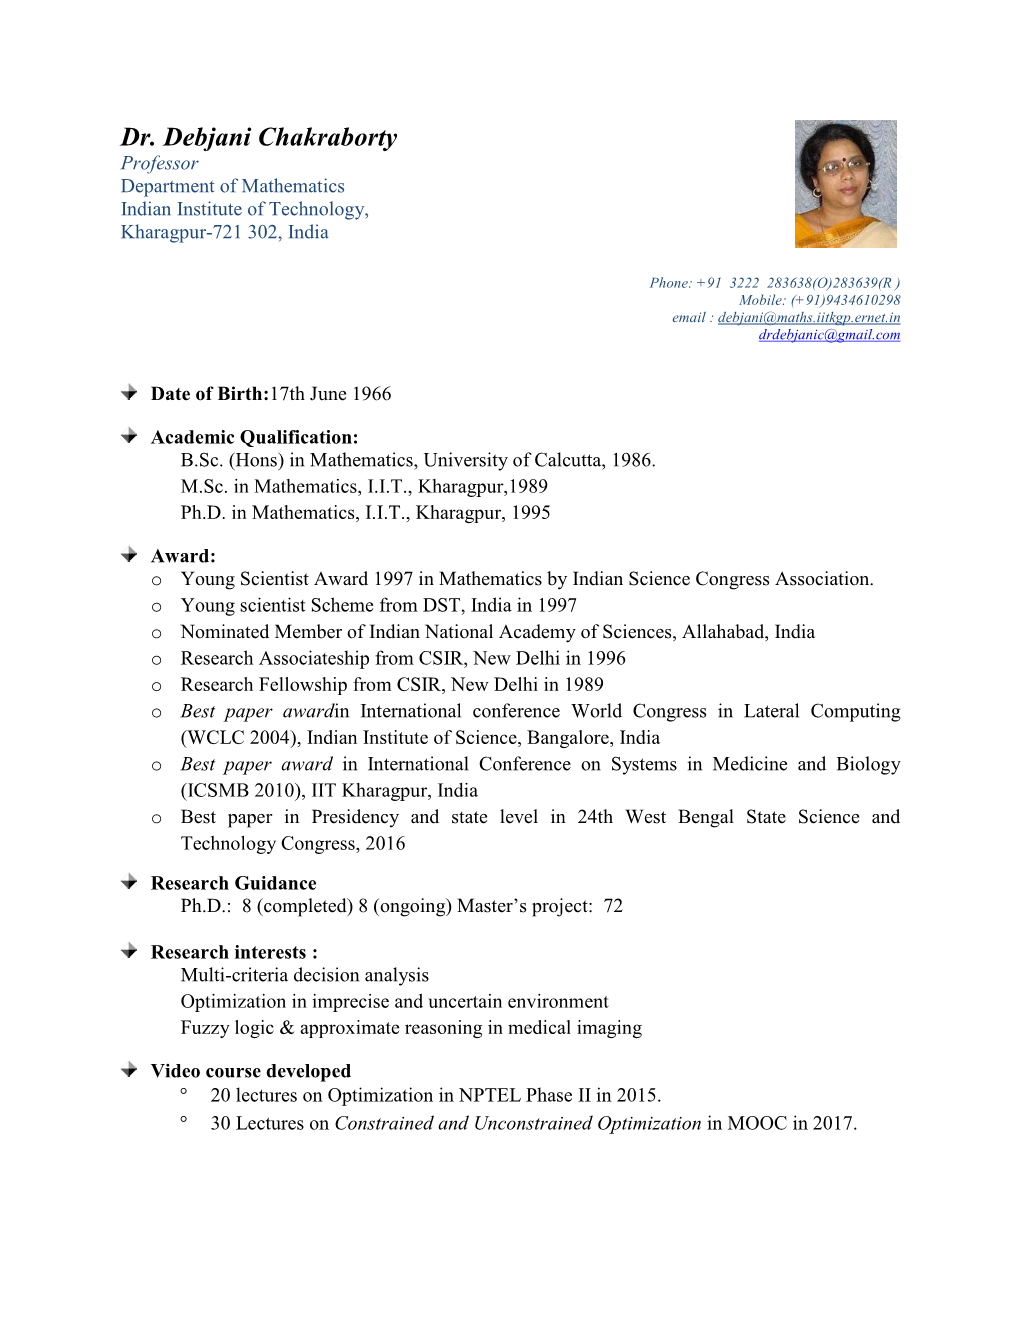 Dr. Debjani Chakraborty Professor Department of Mathematics Indian Institute of Technology, Kharagpur-721 302, India